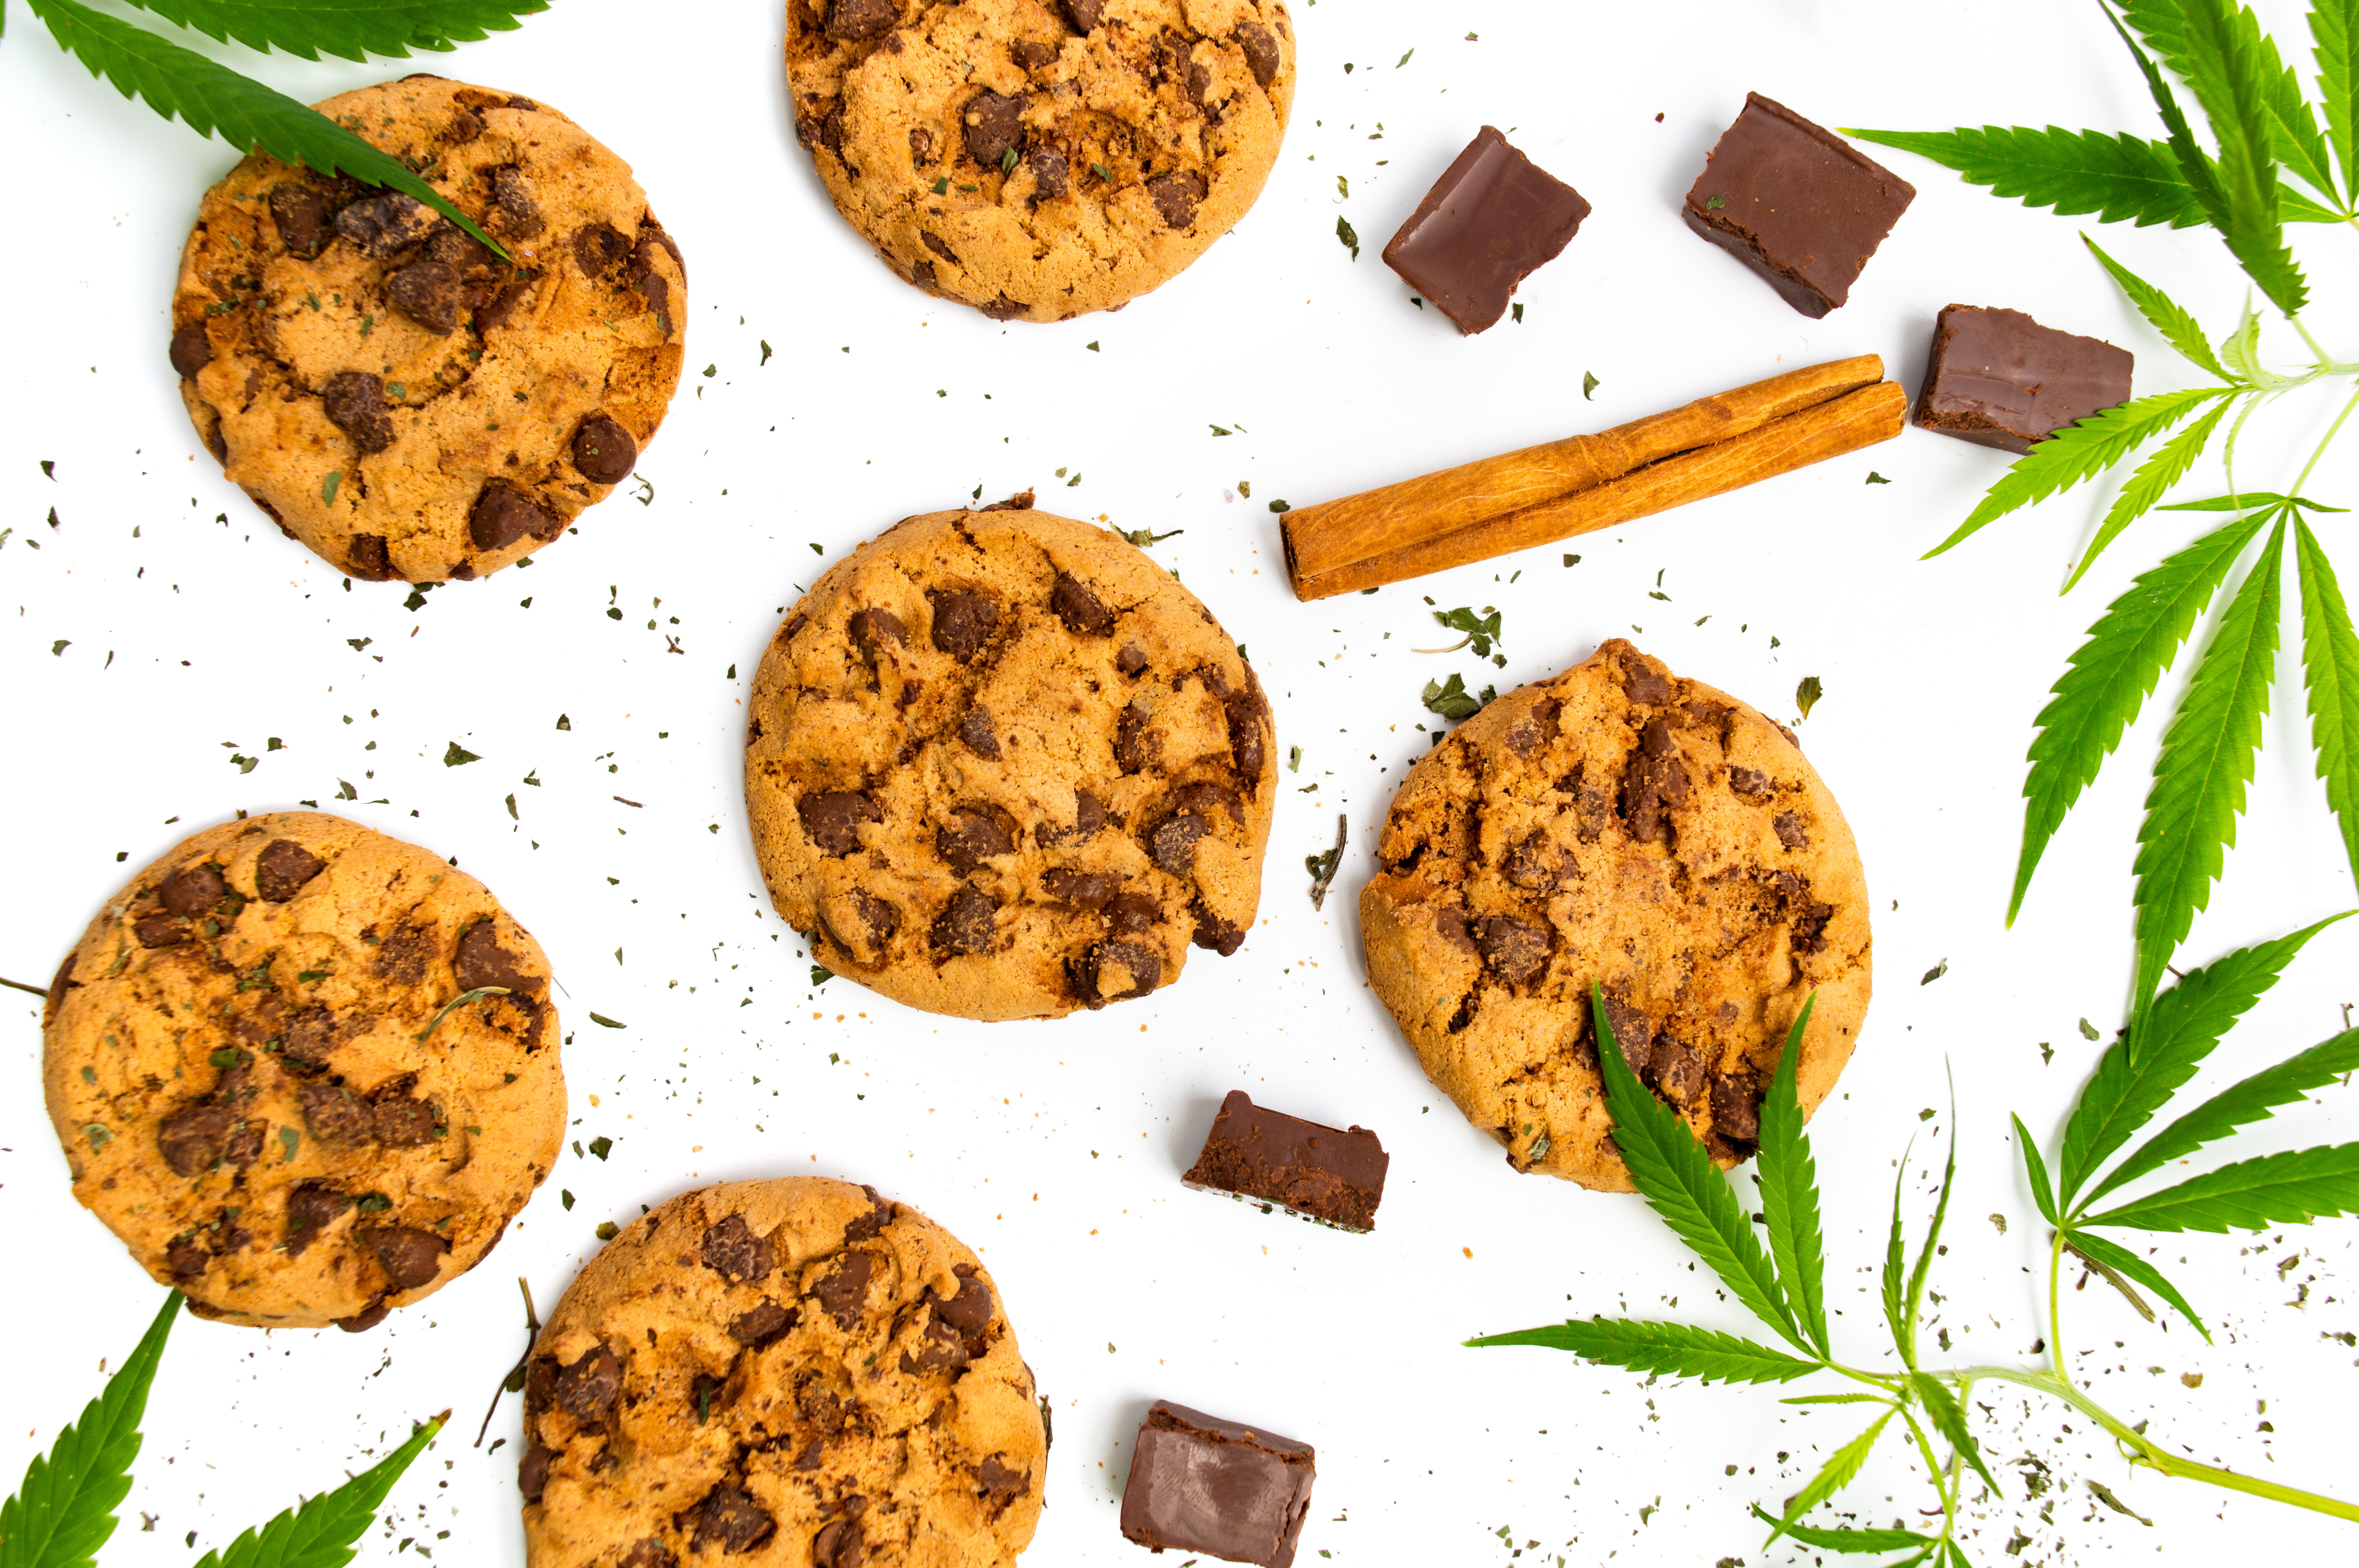 Chocolate chip cookies with marijuana isolated on white